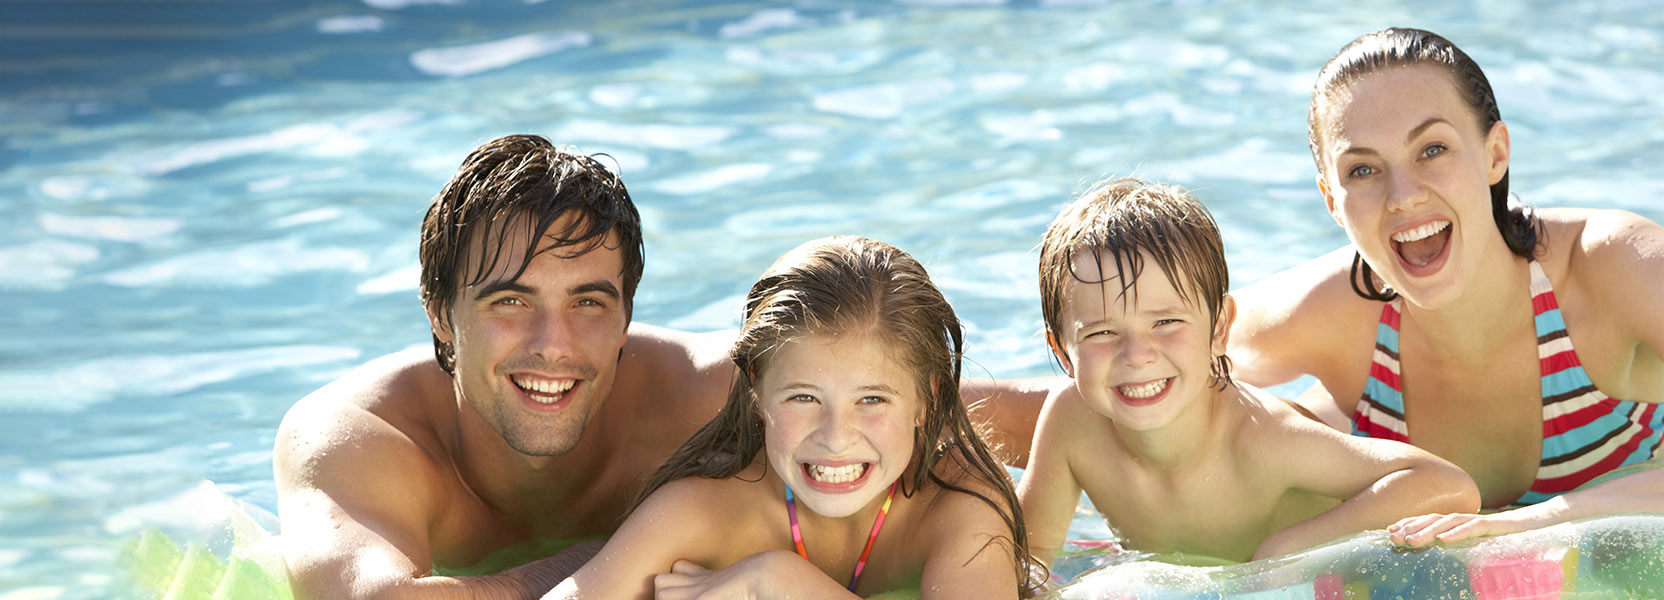 Family in Pool Smiling